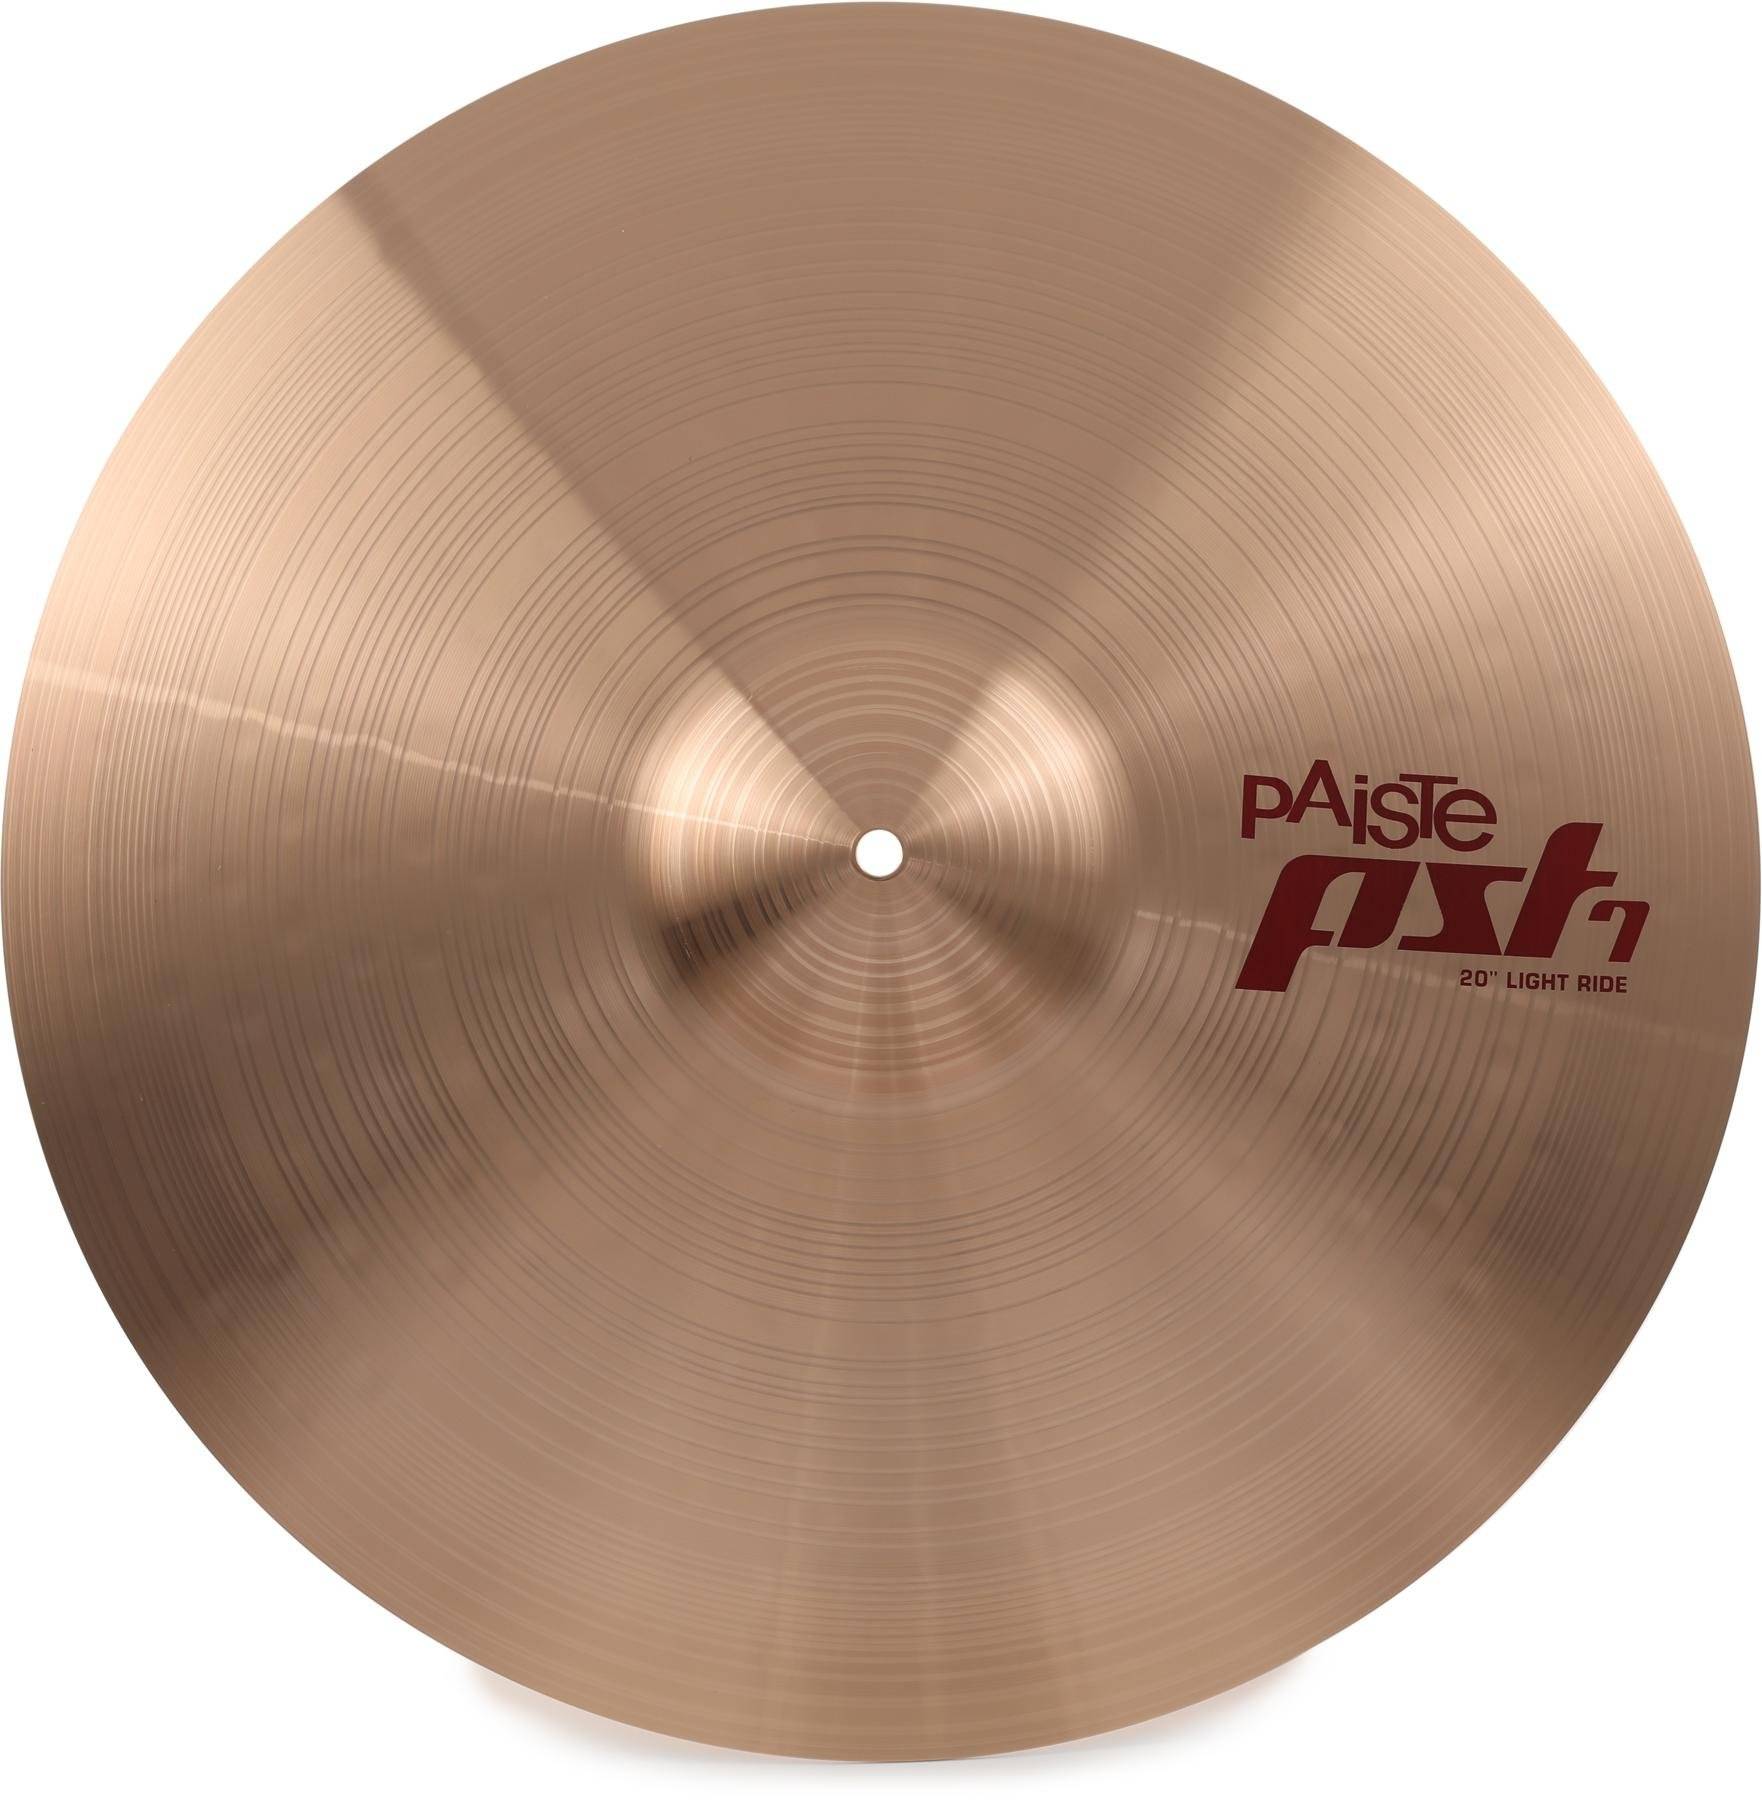 PAISTE PST 7 20" Light Ride Cymbal